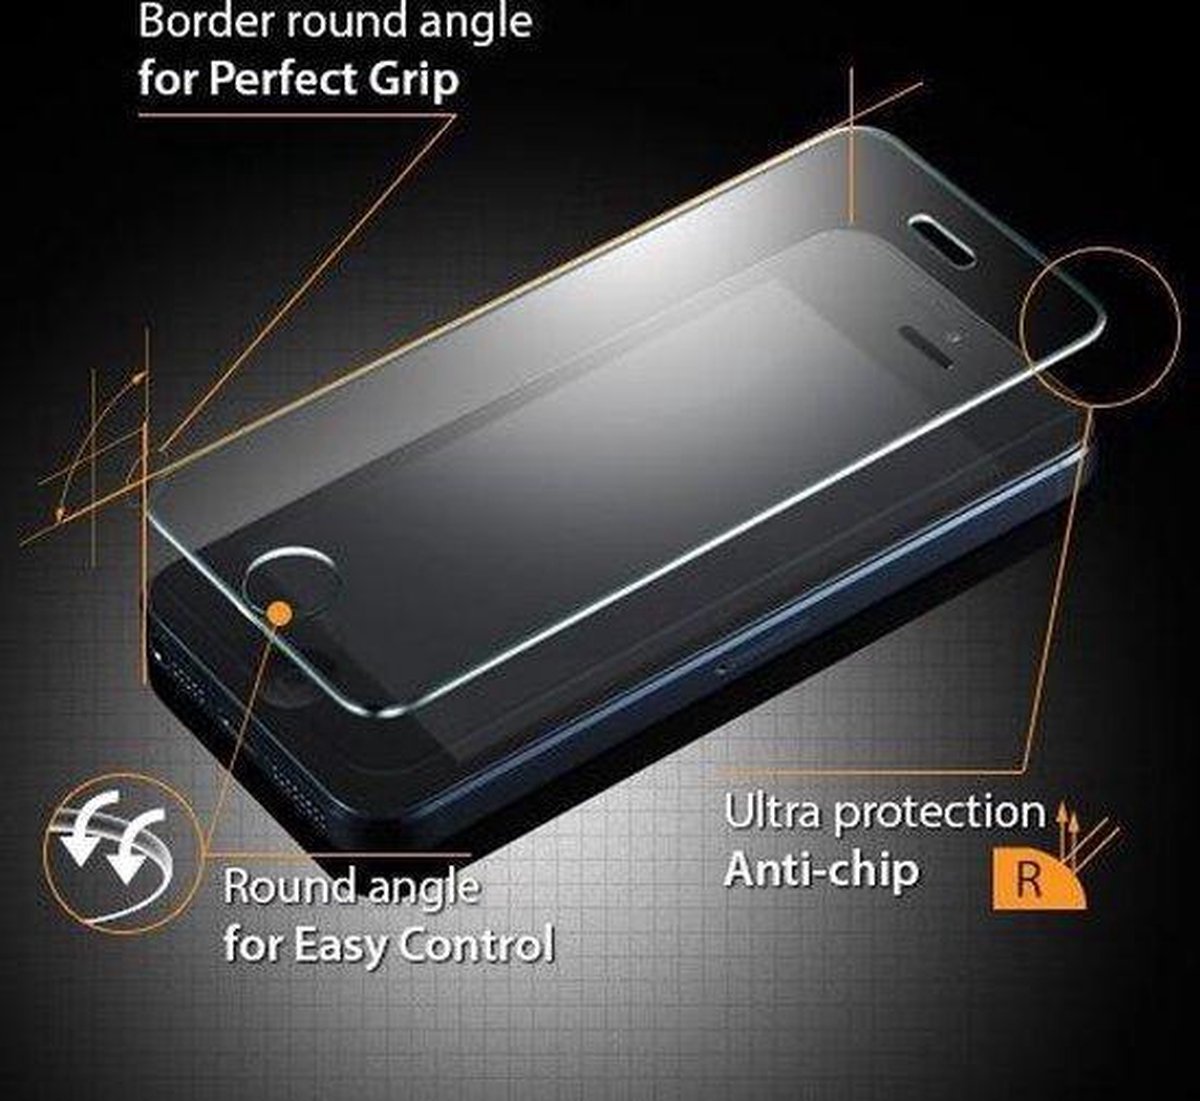 ✅ NEW 1 x iPhone 5/ 5S/ SE / I5c / Ultra Gehard Glass Screenprotector Glasbeschermer |Bescherm hardheid (9H) | Anti Shattered Film coating | Ultra HD LightScreen |Ultradun slank ontwerp. ✅PROLEDPARTNERS ®